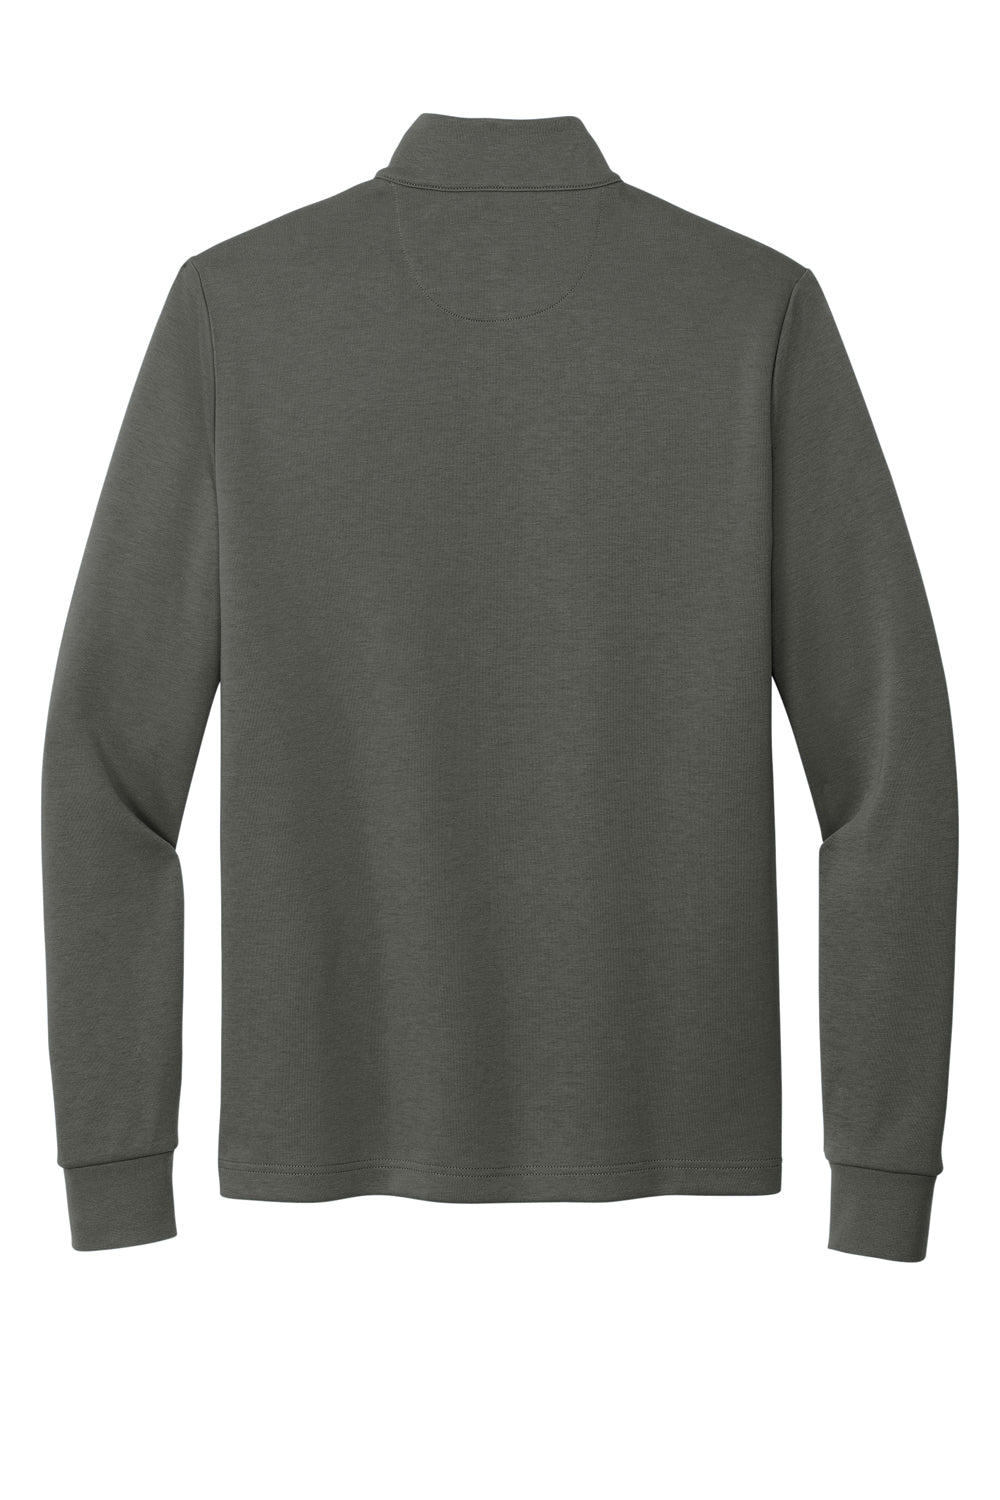 Brooks Brothers Mens Double Knit 1/4 Zip Sweatshirt Windsor Grey Flat Back